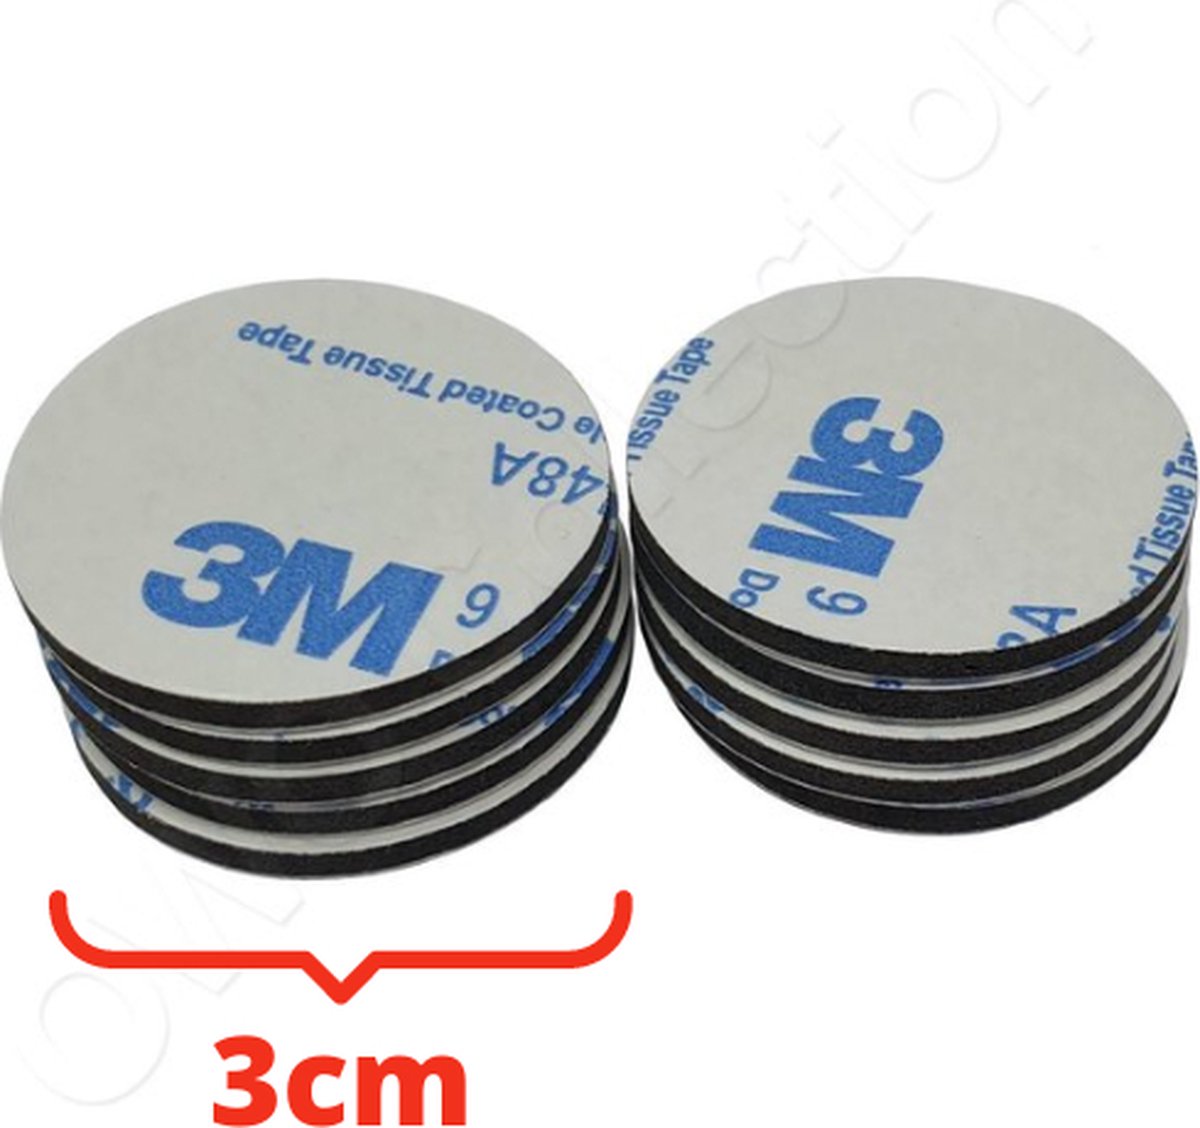 3M dubbelzijdig zelfklevende zwarte montage stickers | tape | plakband | foampad | 10 stuks | 3cm rond - 3M